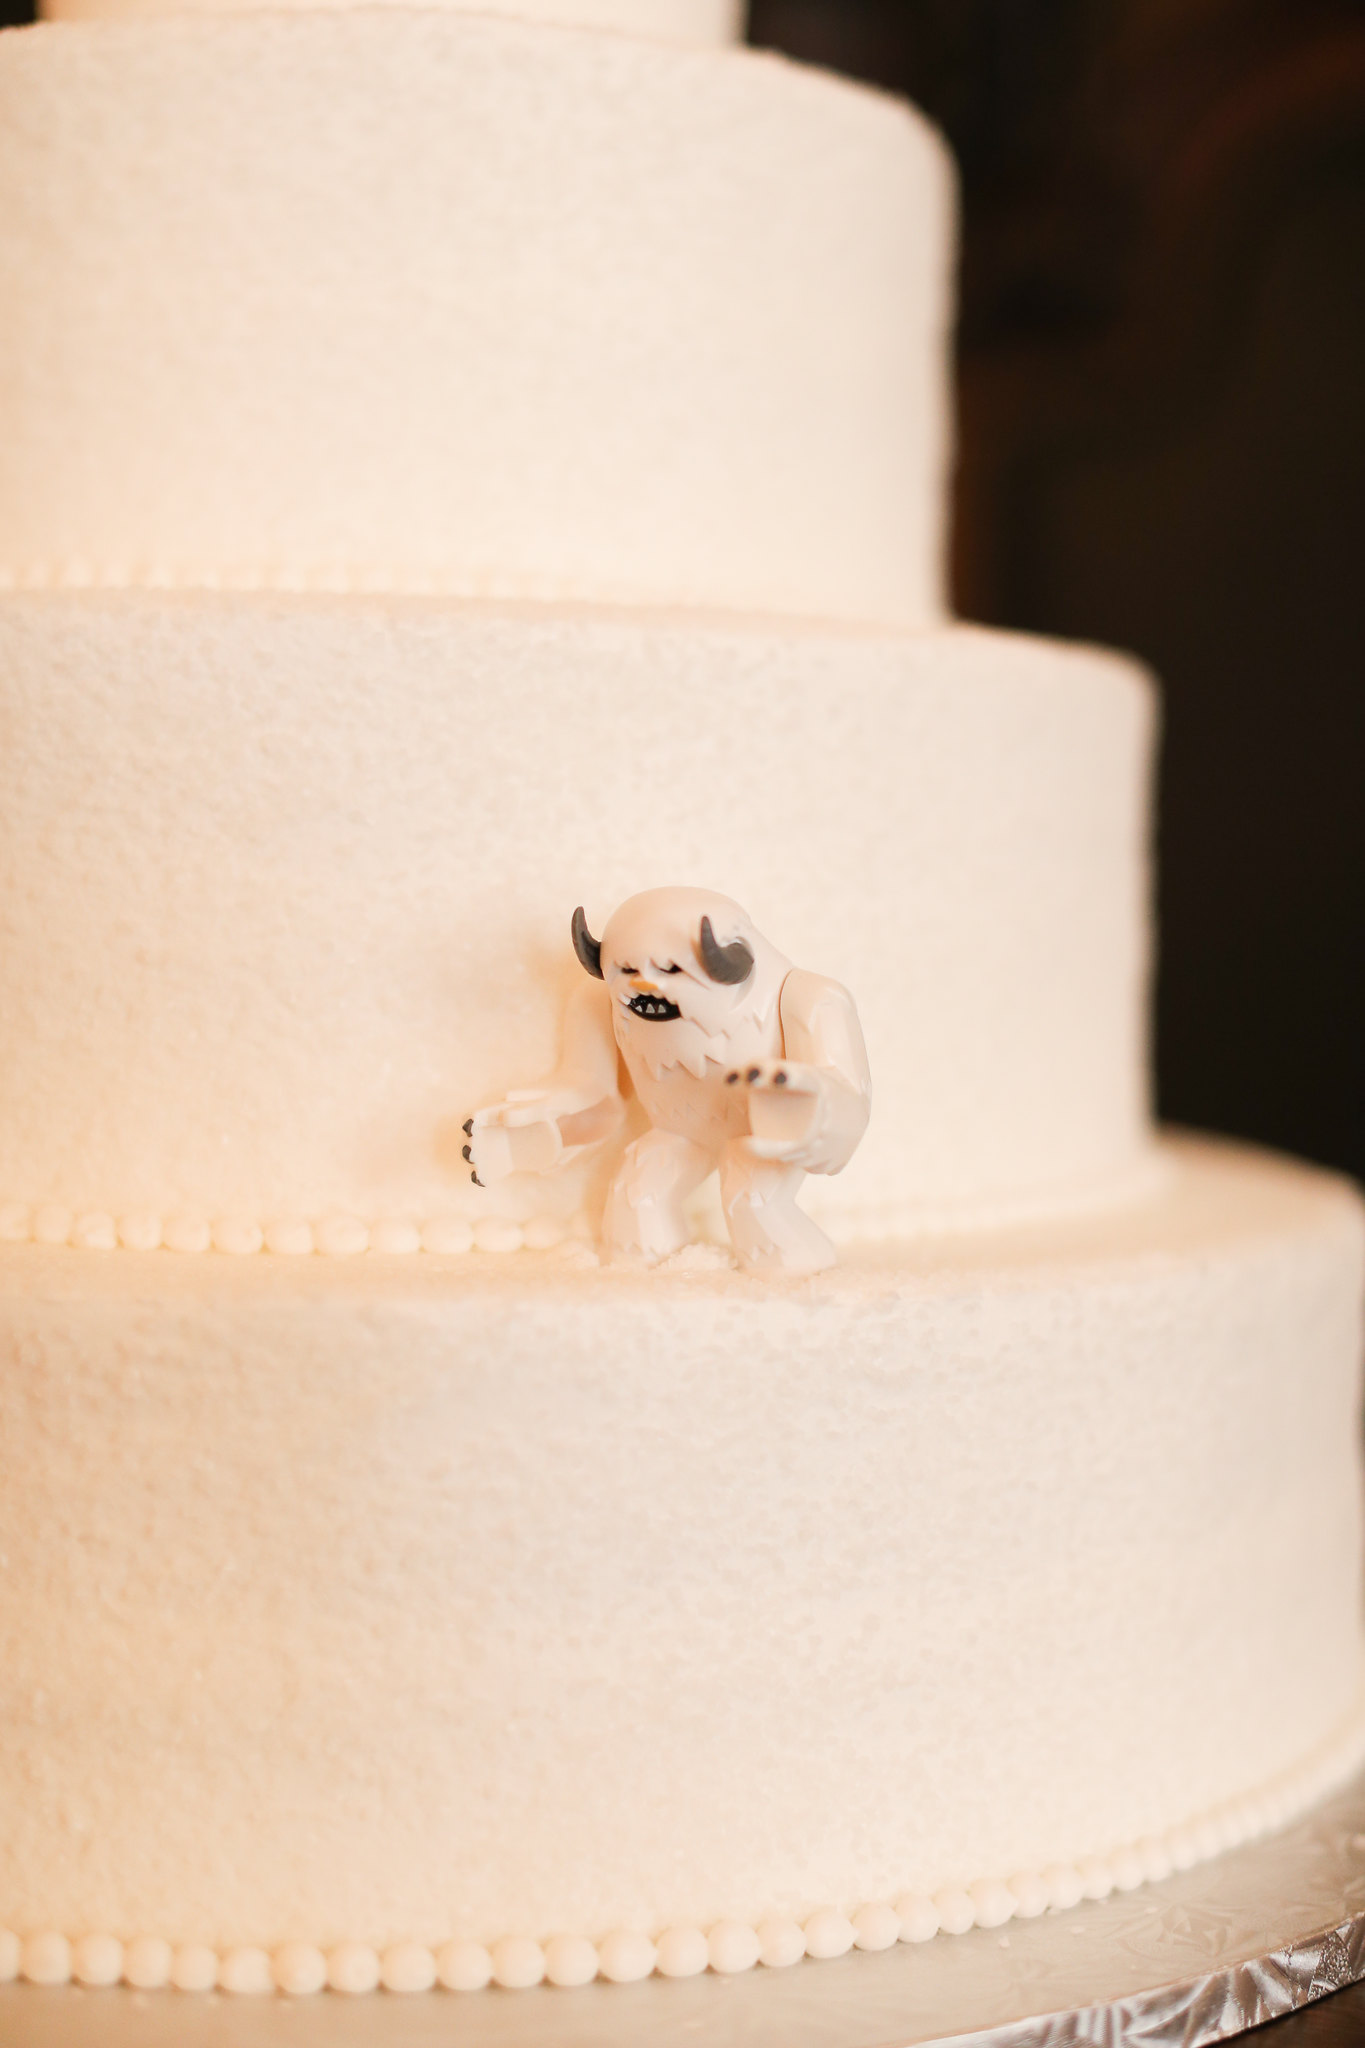 This LEGO wedding bouquet has hidden minifigs • Offbeat Wed (was Offbeat  Bride)